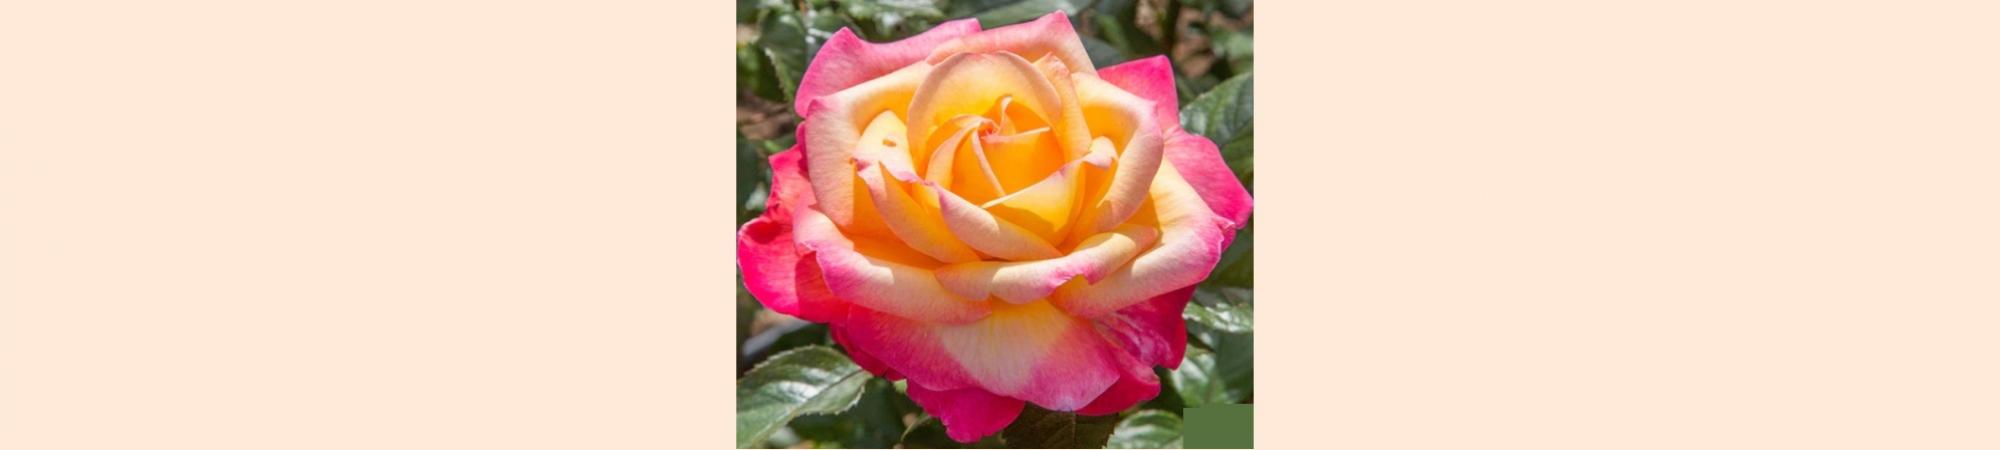 A beautiful Eternal Peace Rose bloom.